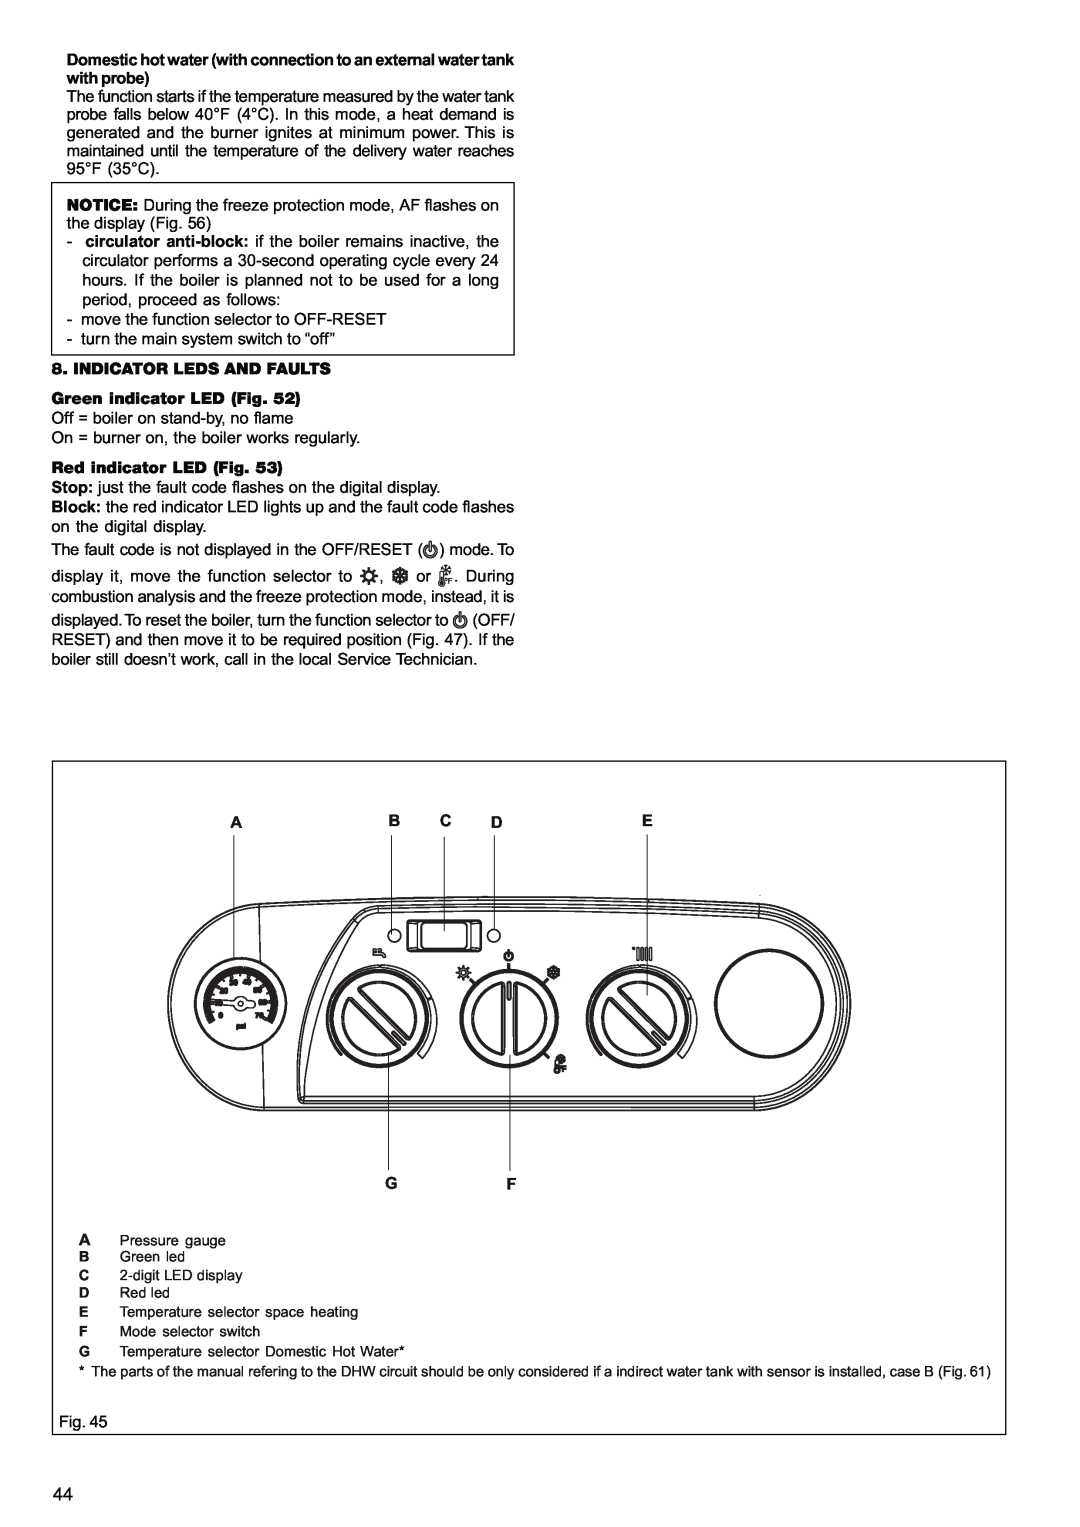 Raypak 85, 120 manual Indicator Leds And Faults, Green indicator LED Fig, Red indicator LED Fig, Ab C De Gf 